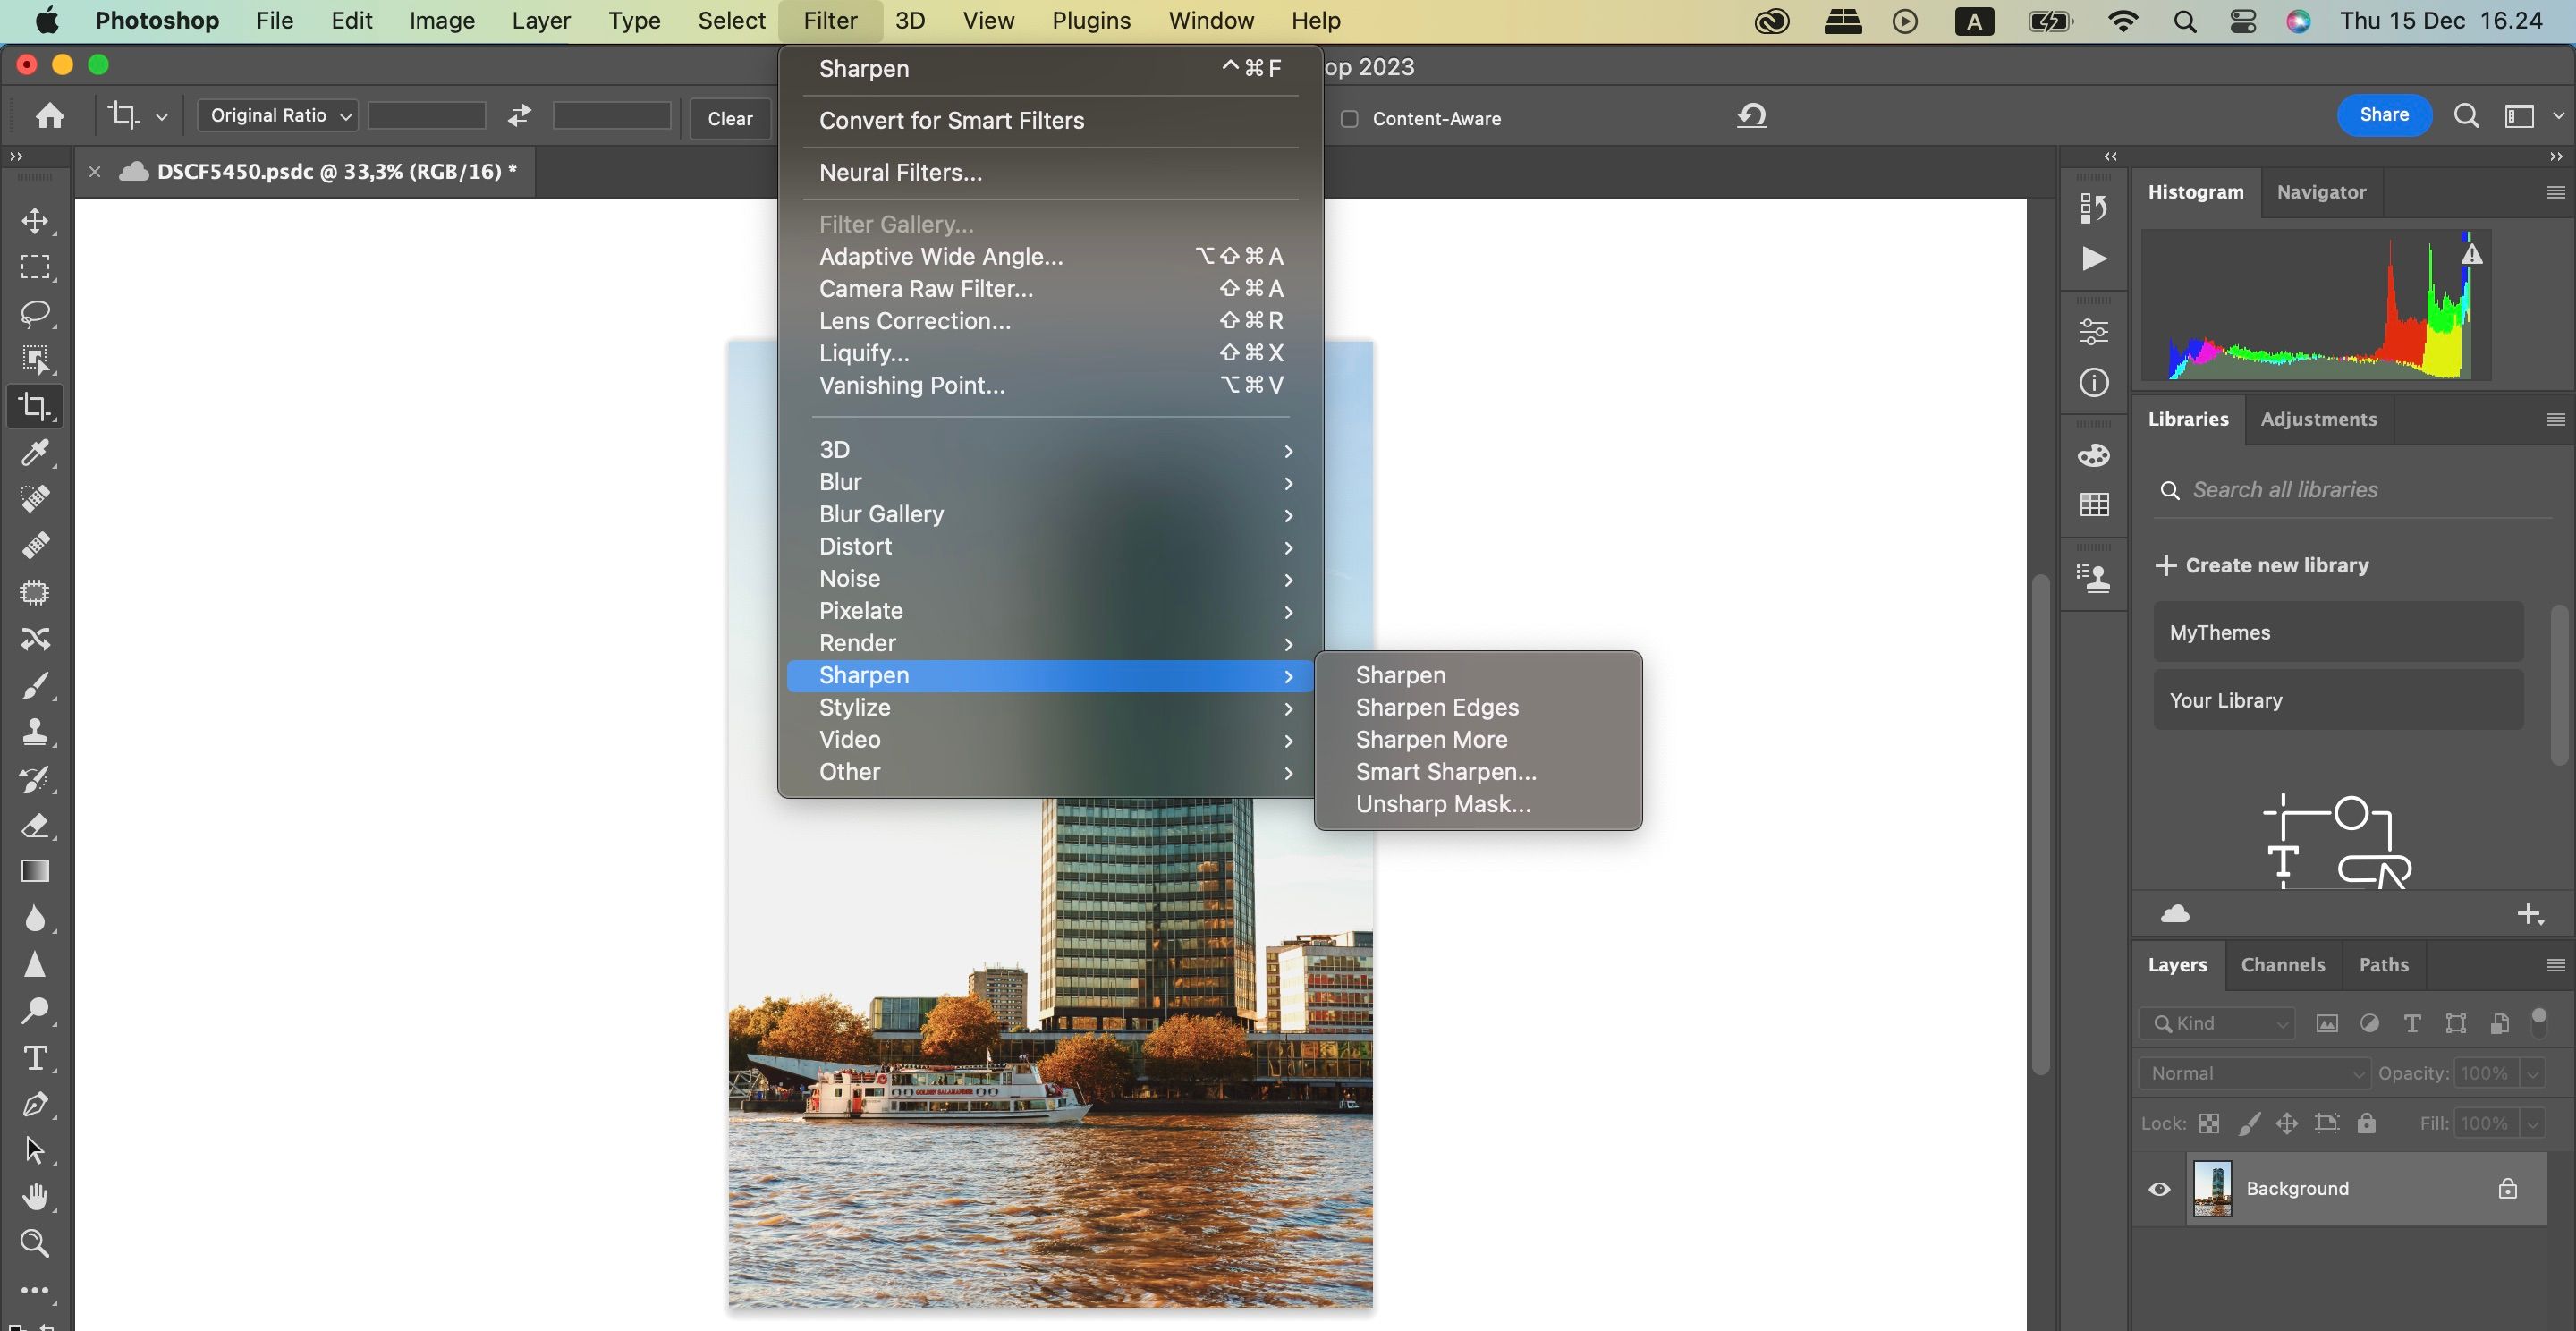 Screenshot of Photoshop's smart sharpen tool